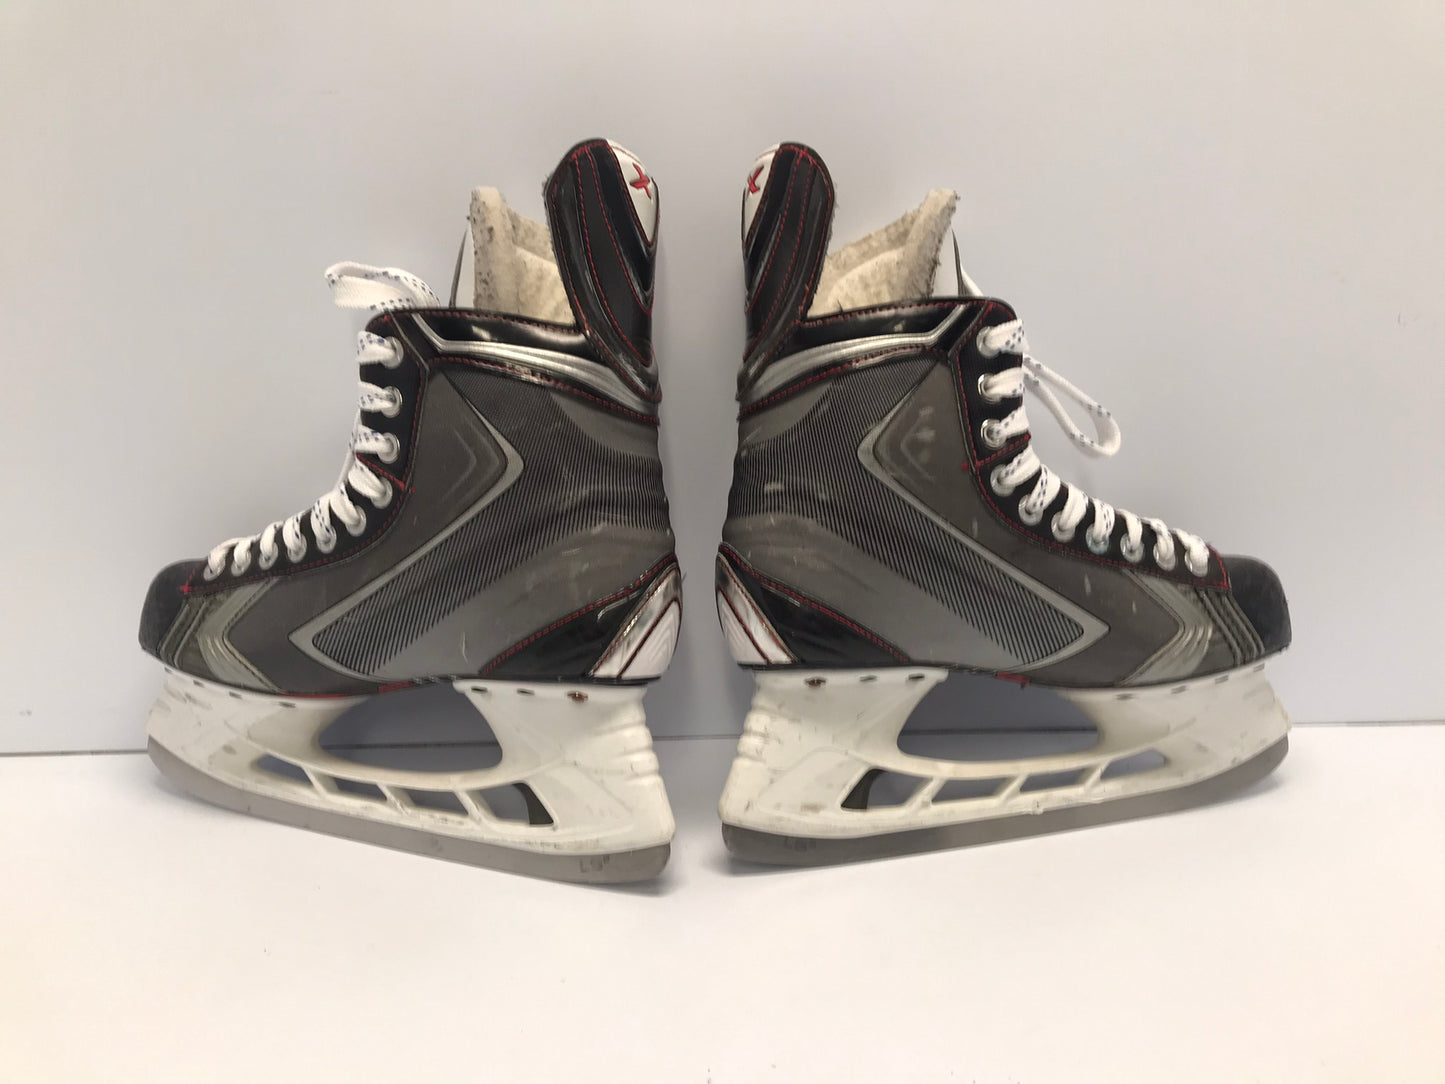 Hockey Skates Men's Size 8 Shoe 6.5 Skate Size Bauer Vapor XShift